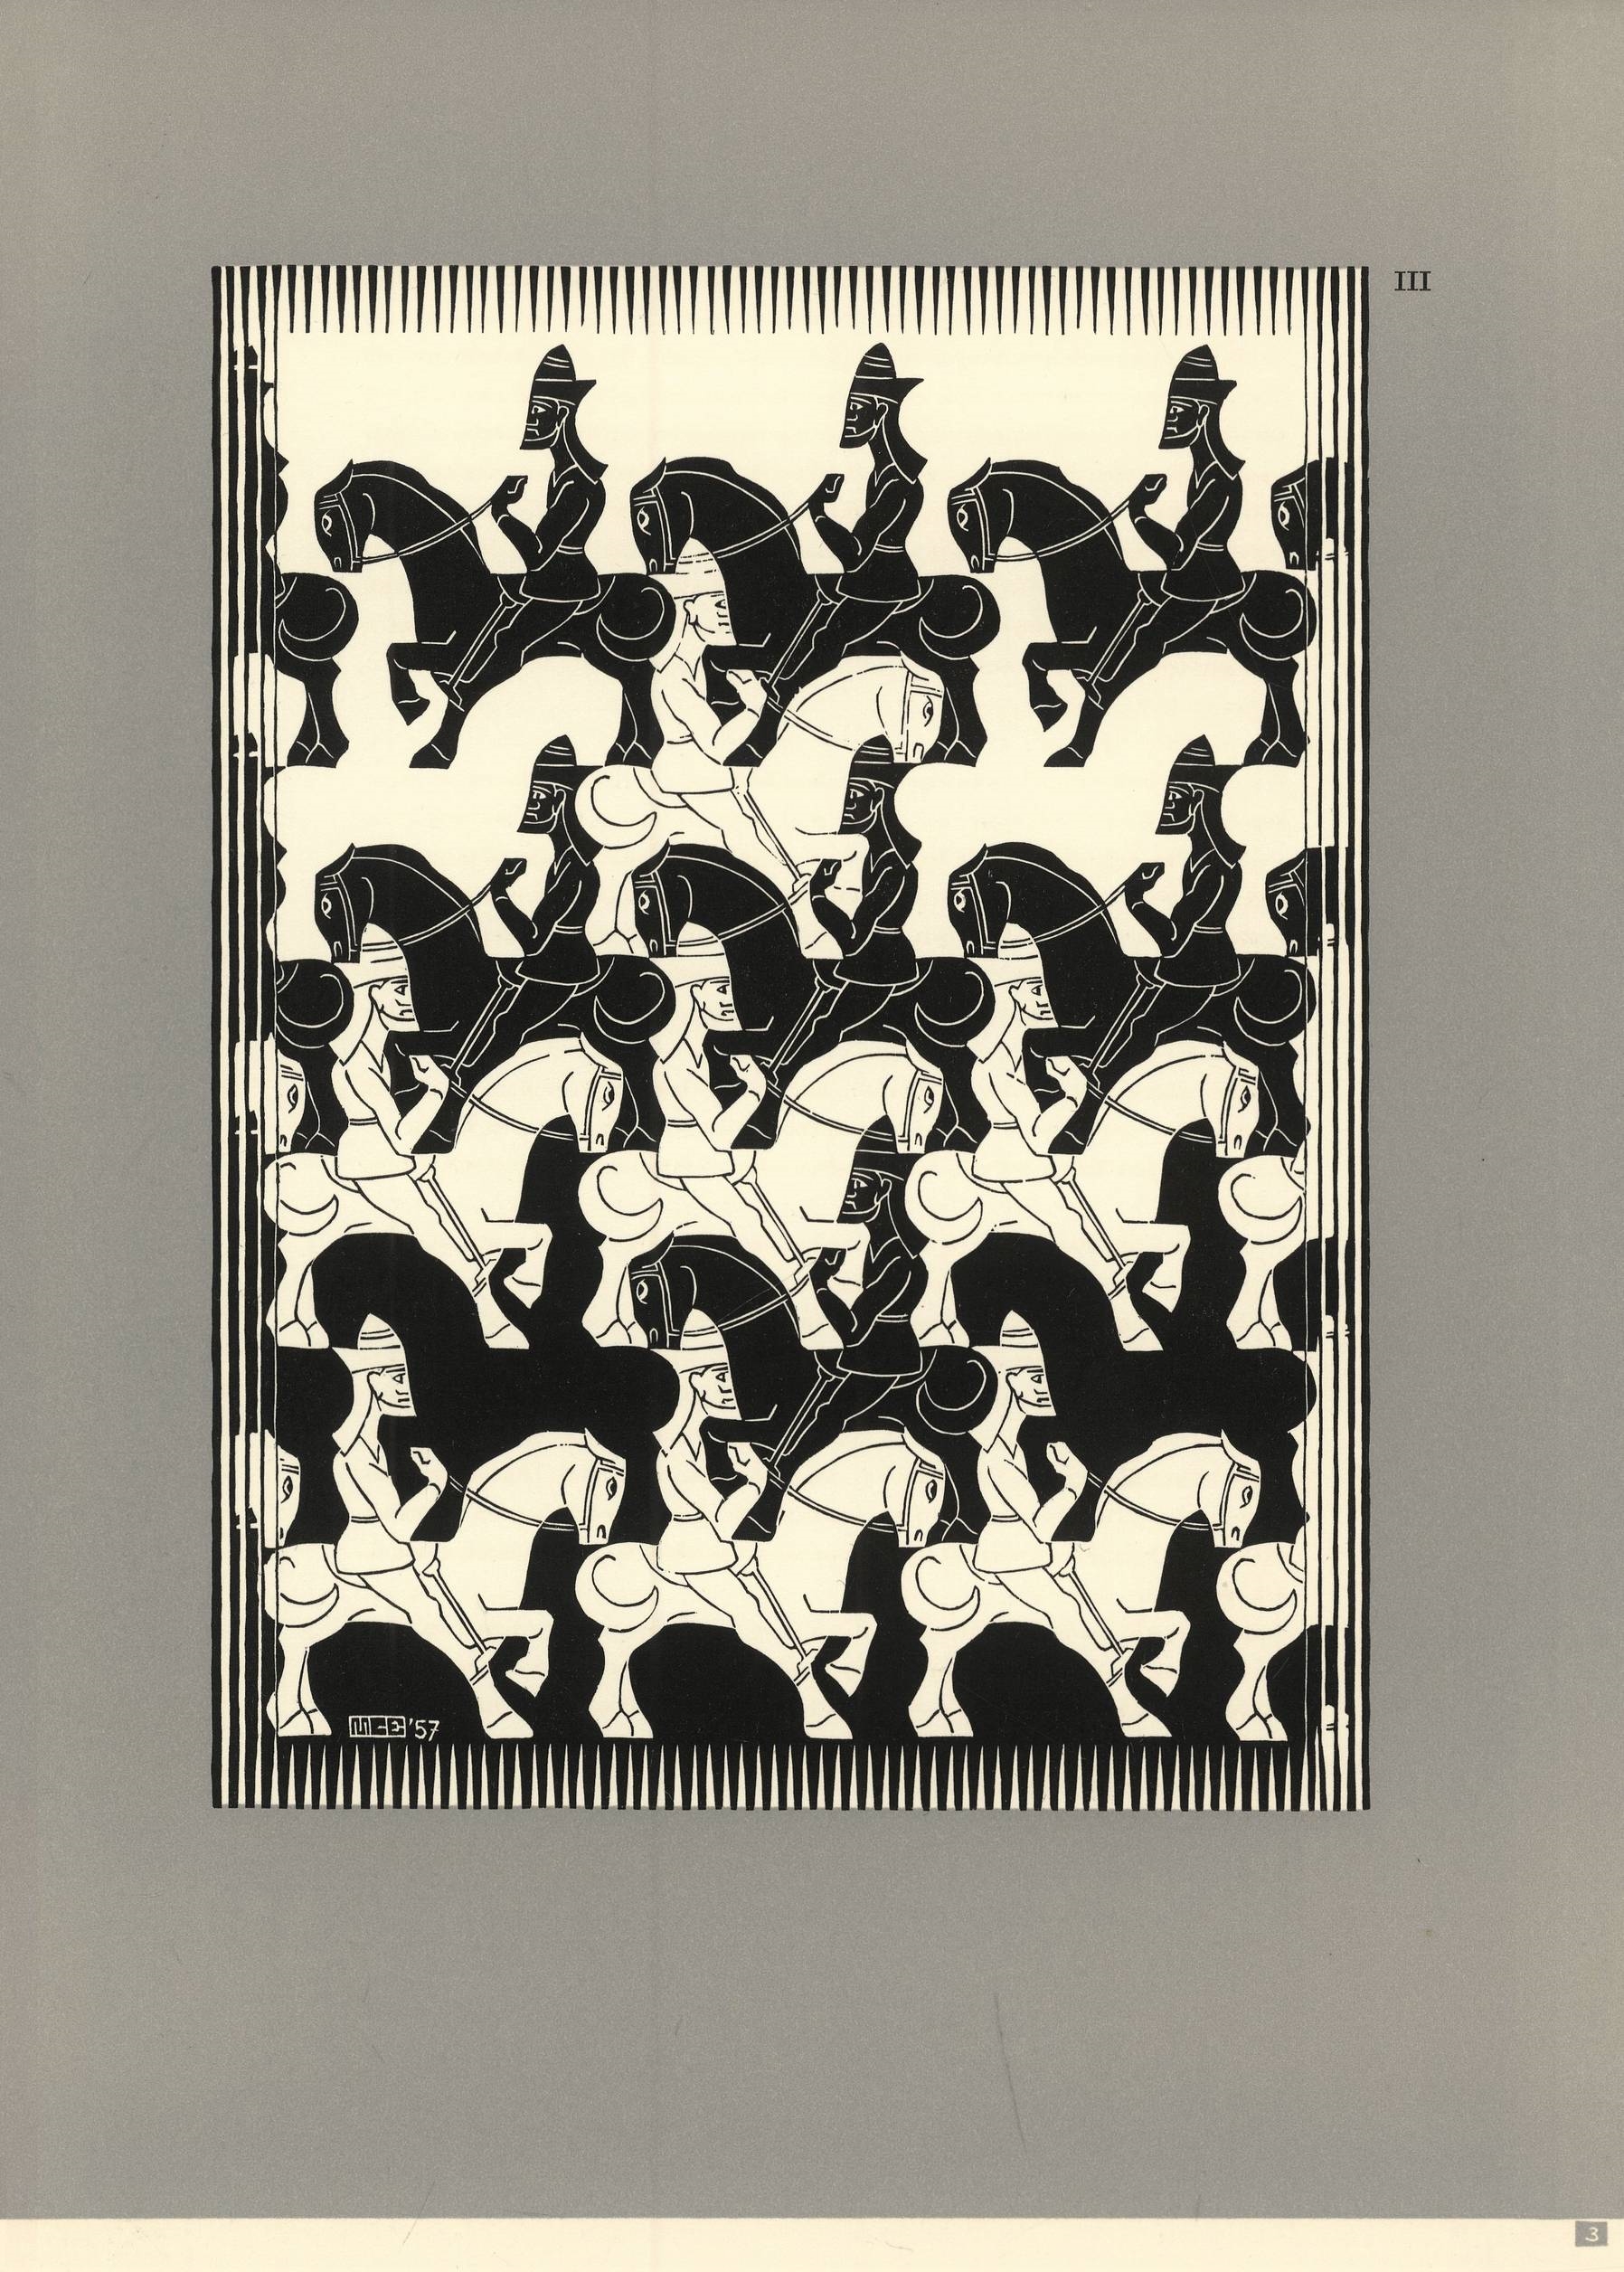 Artwork by Maurits Cornelis Escher, Regelmatige vlakverdeling III, Made of Woodcut, printed in black and grey